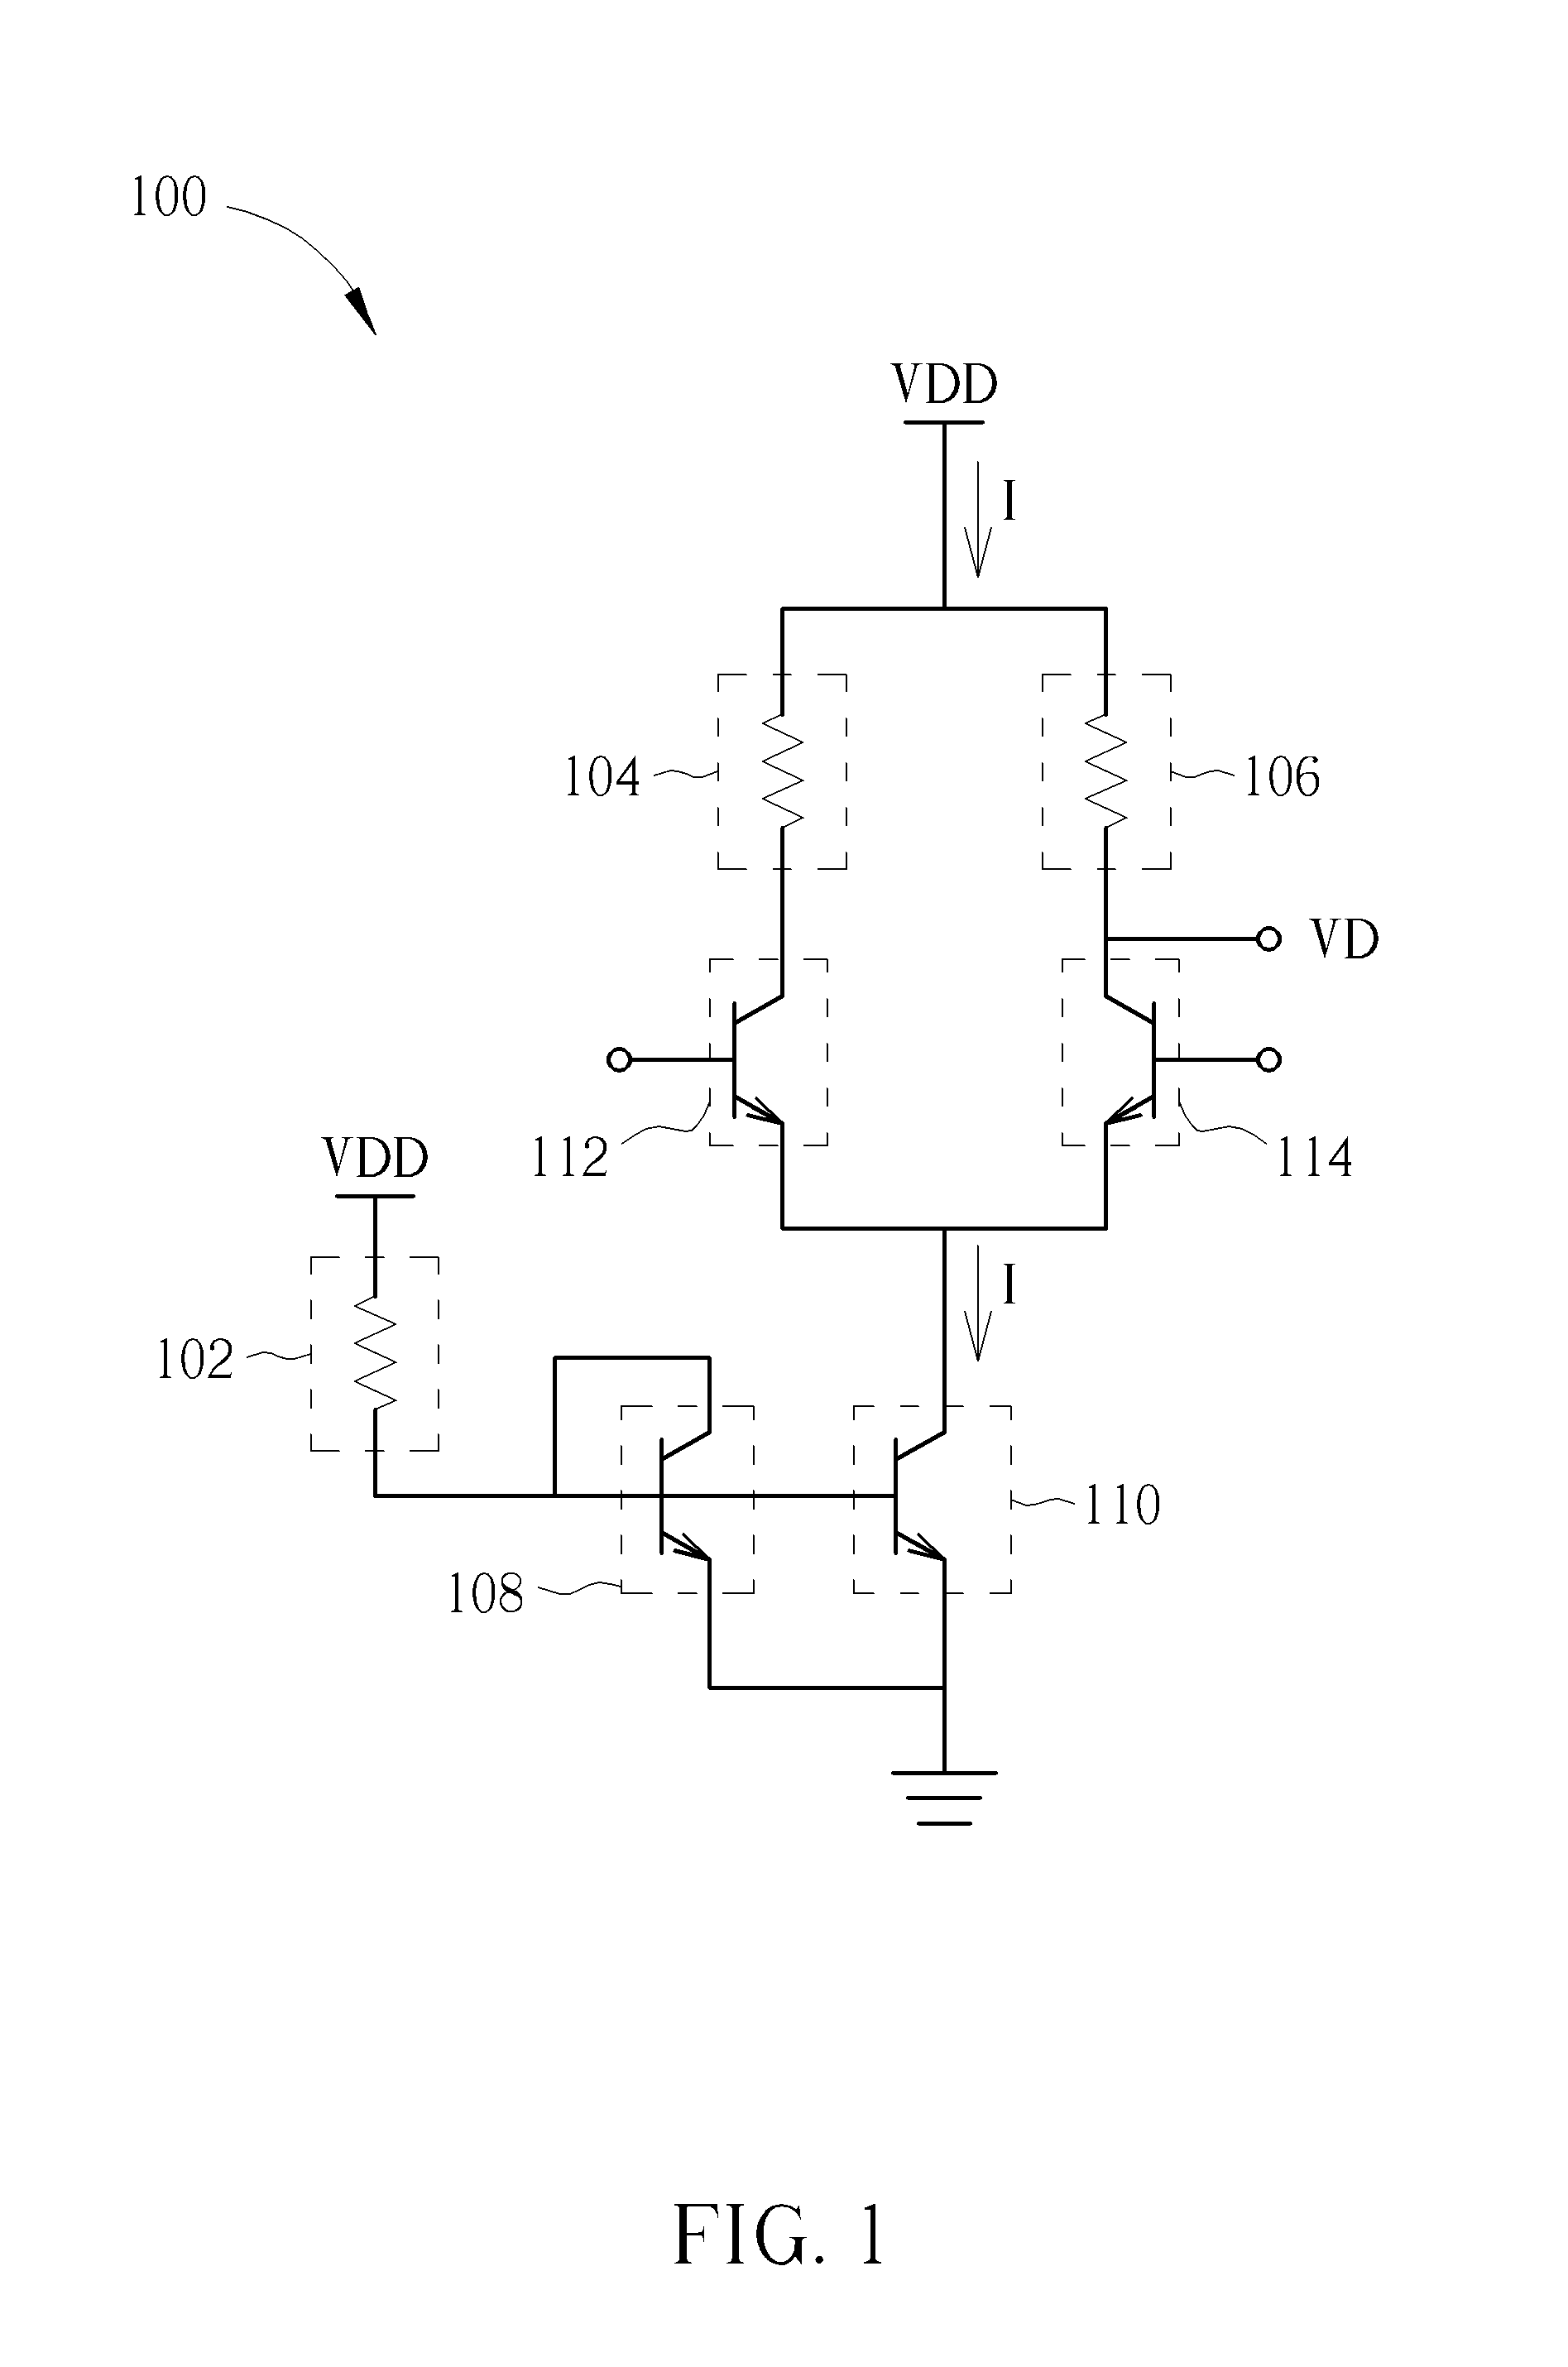 Fixed voltage generating circuit